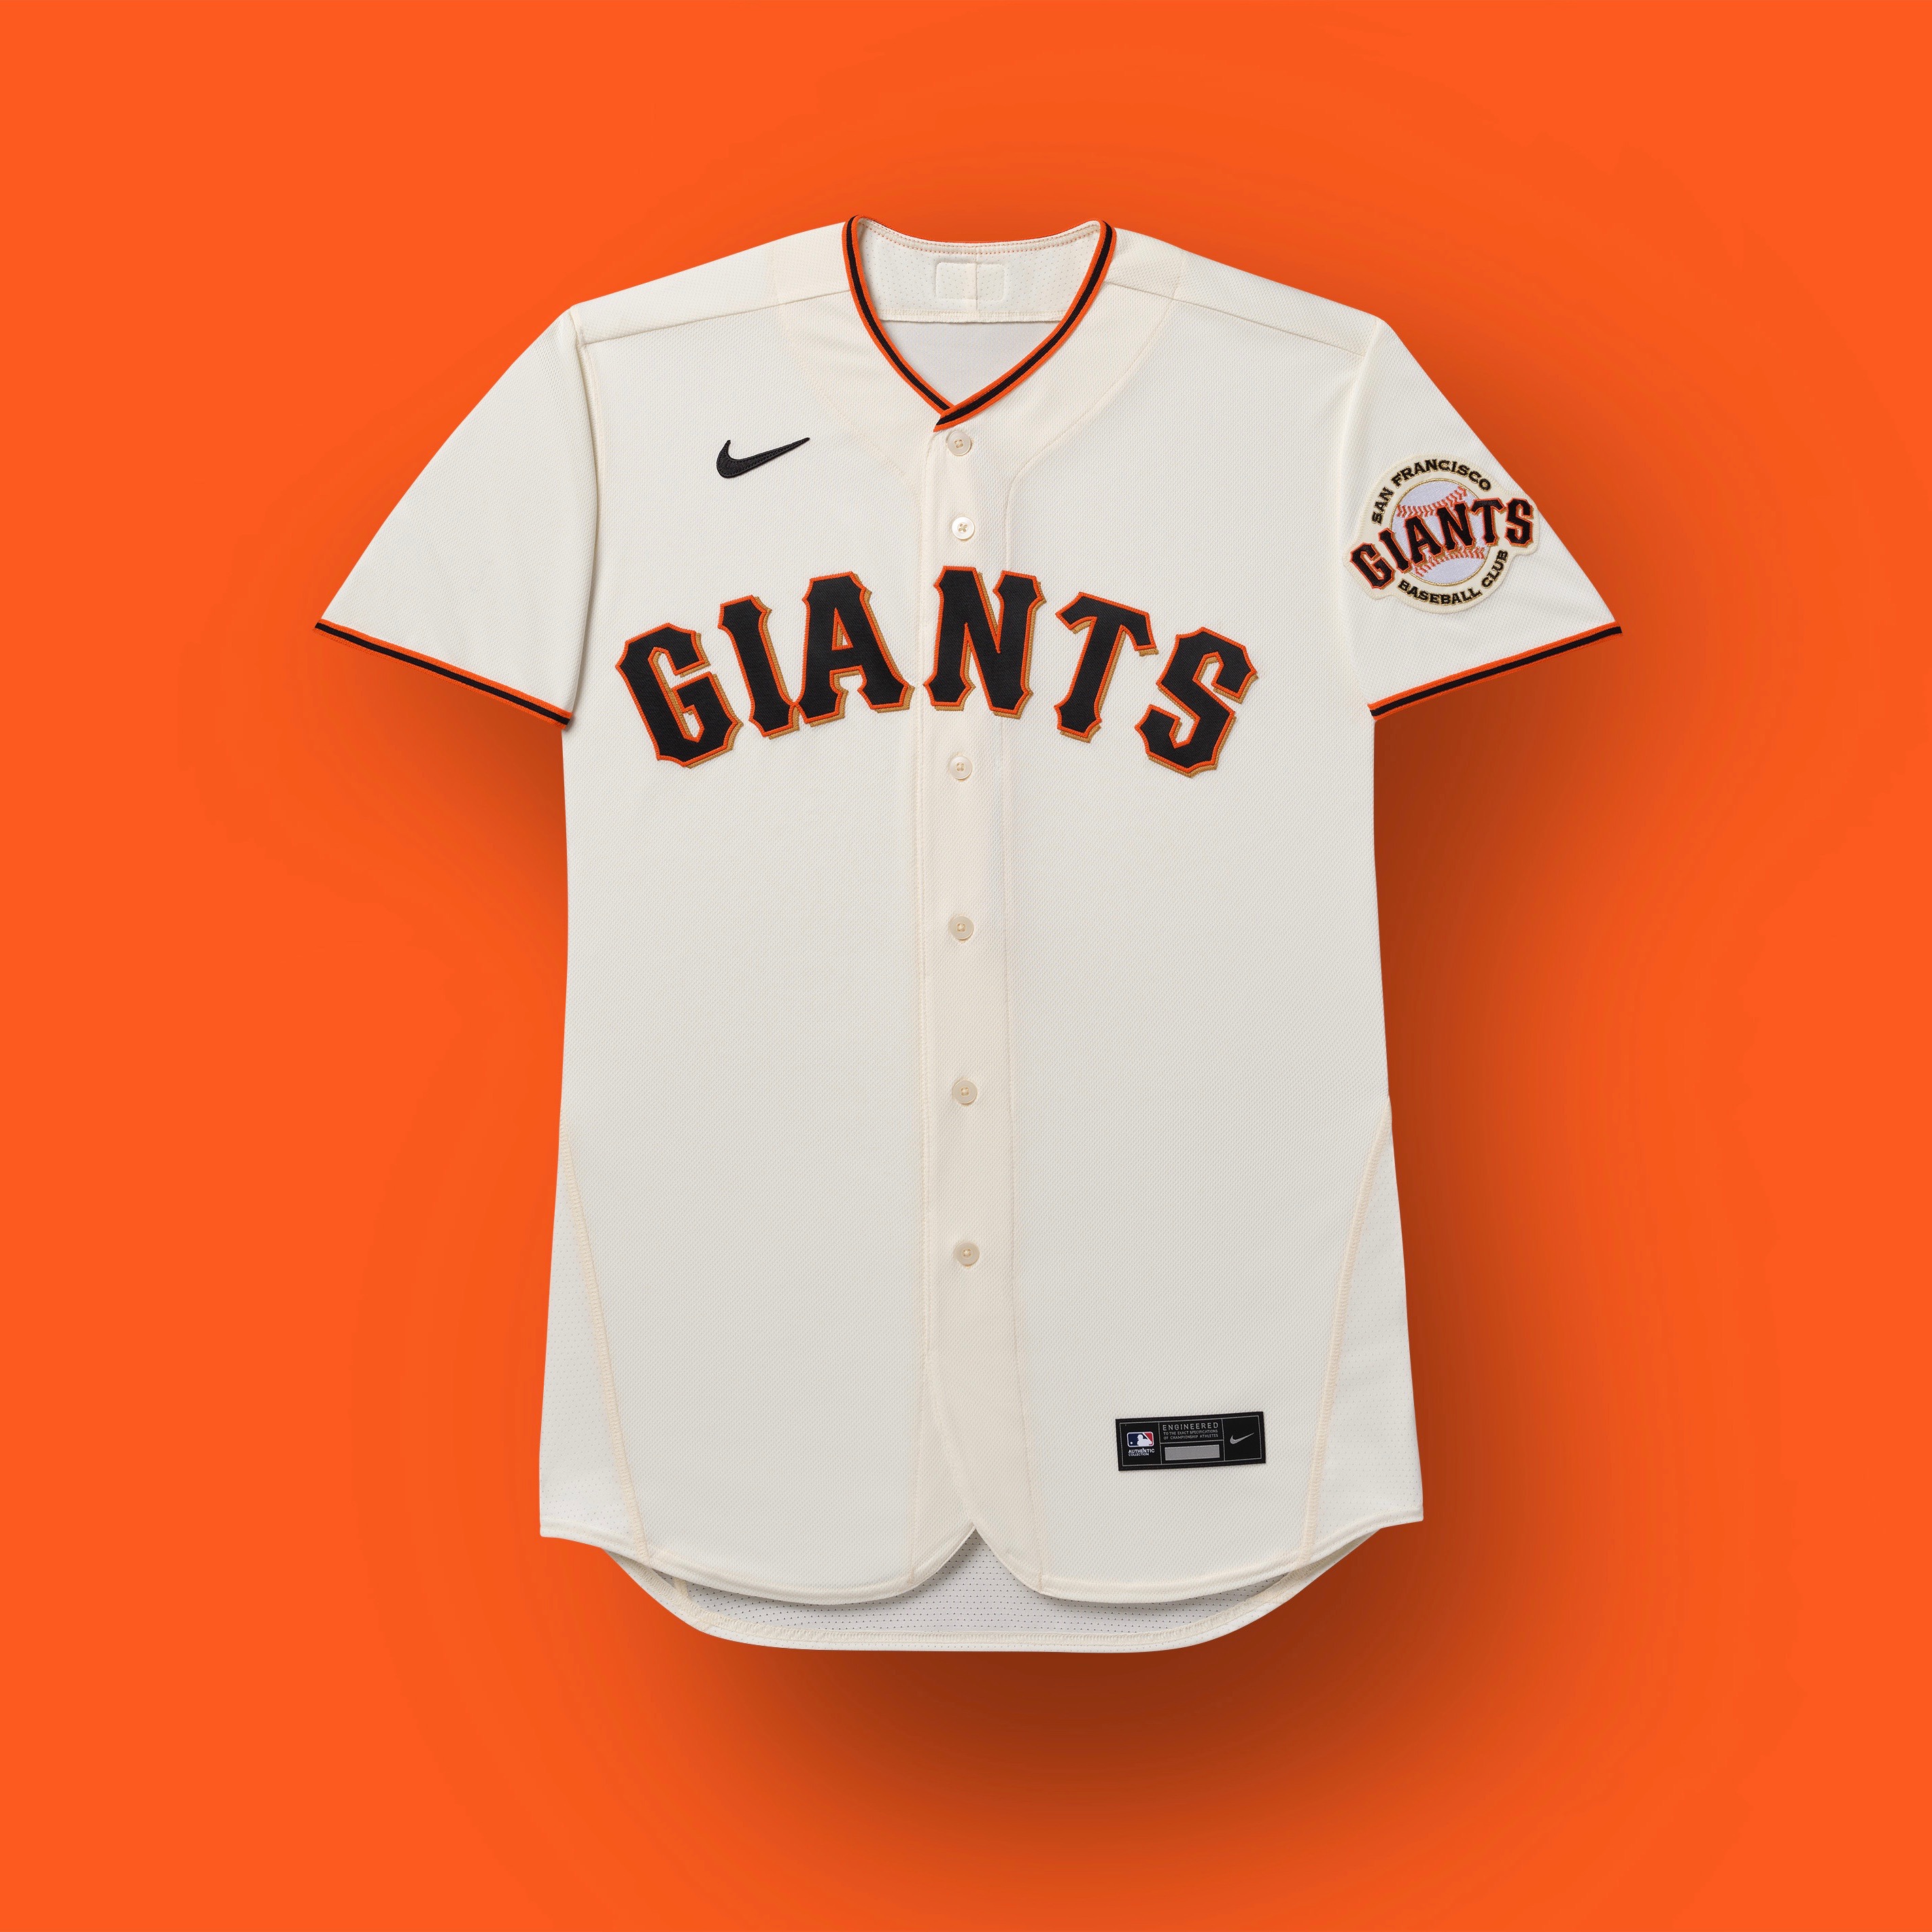 giants 2020 uniforms